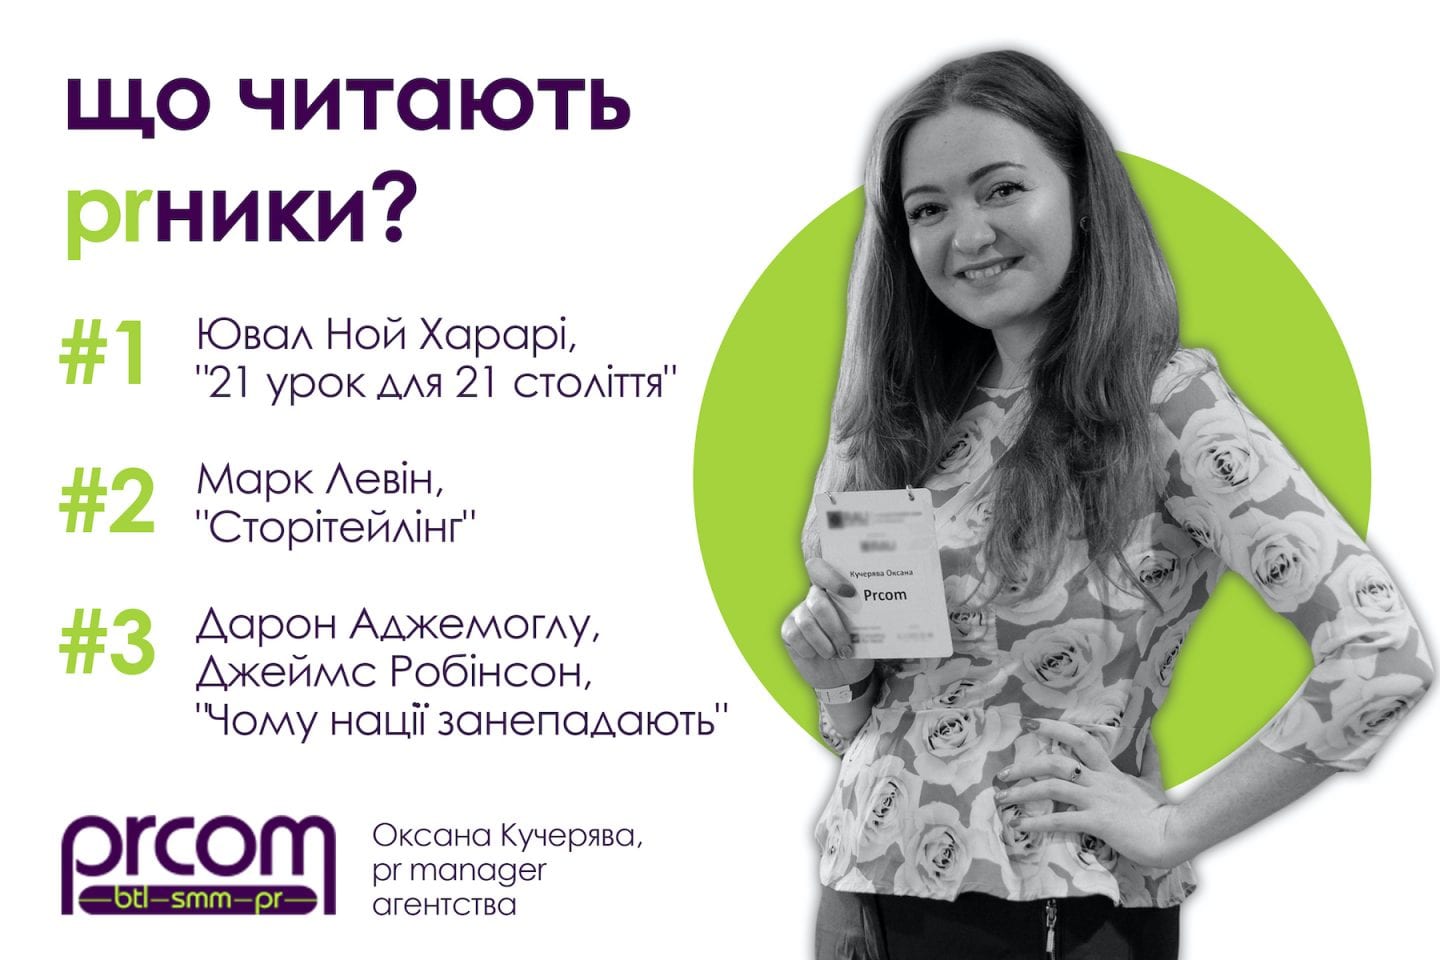 Оксана Кучерява, PR manager Prcom